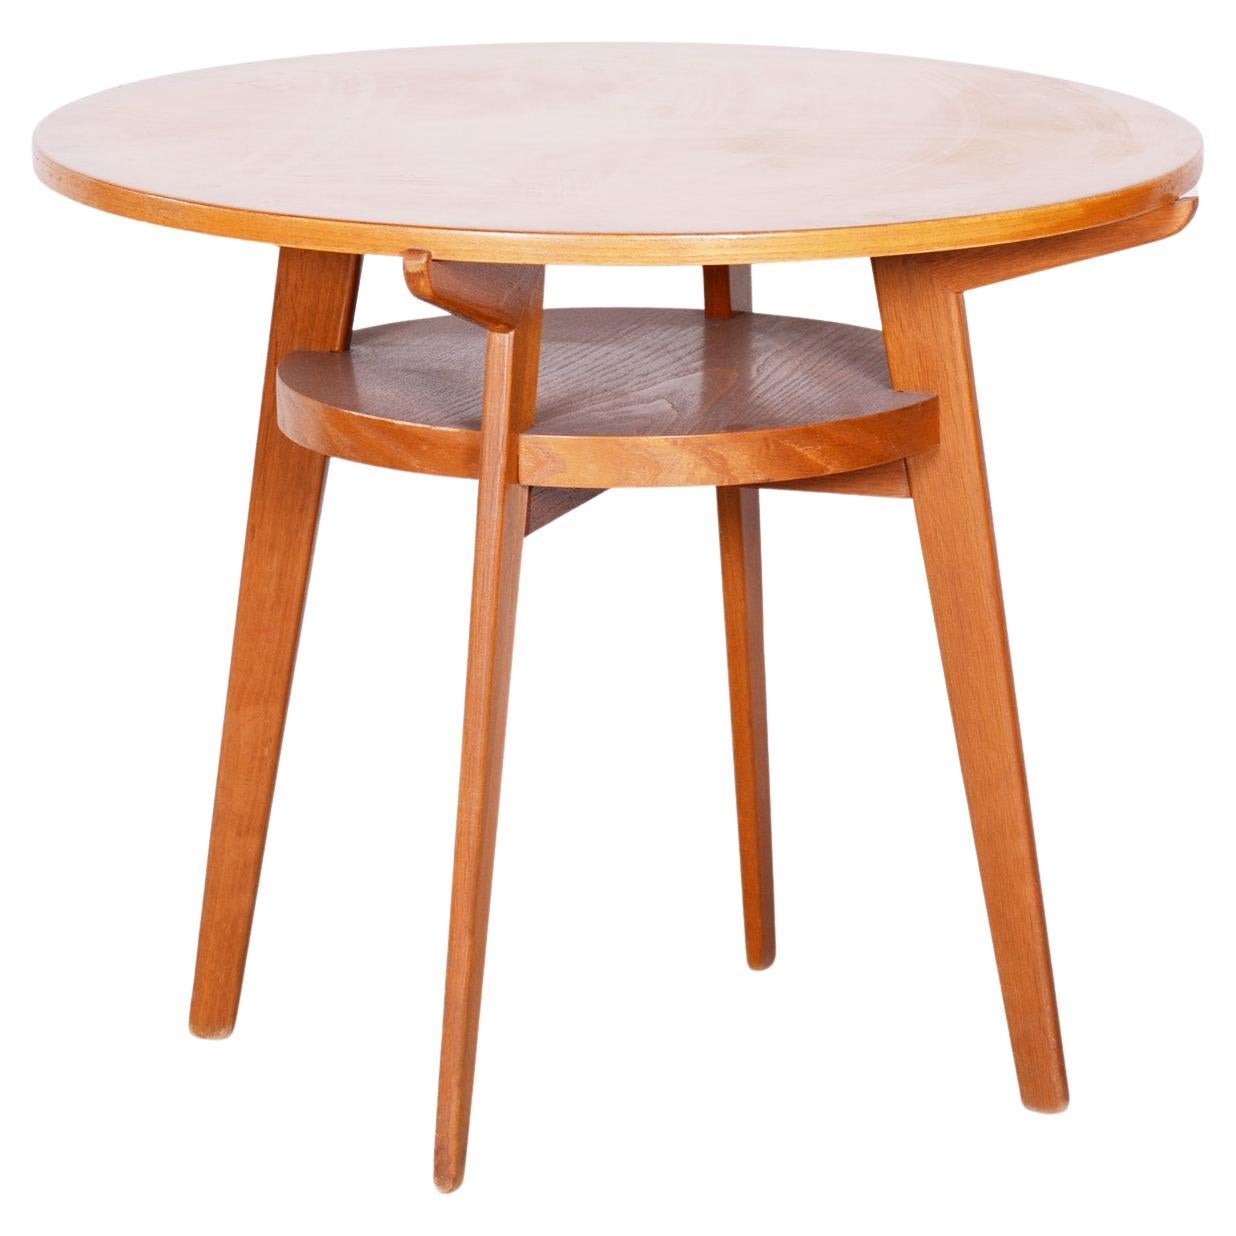 Small Mid Century Table, Made in Czechia, 1950s, Original Condition, Oak